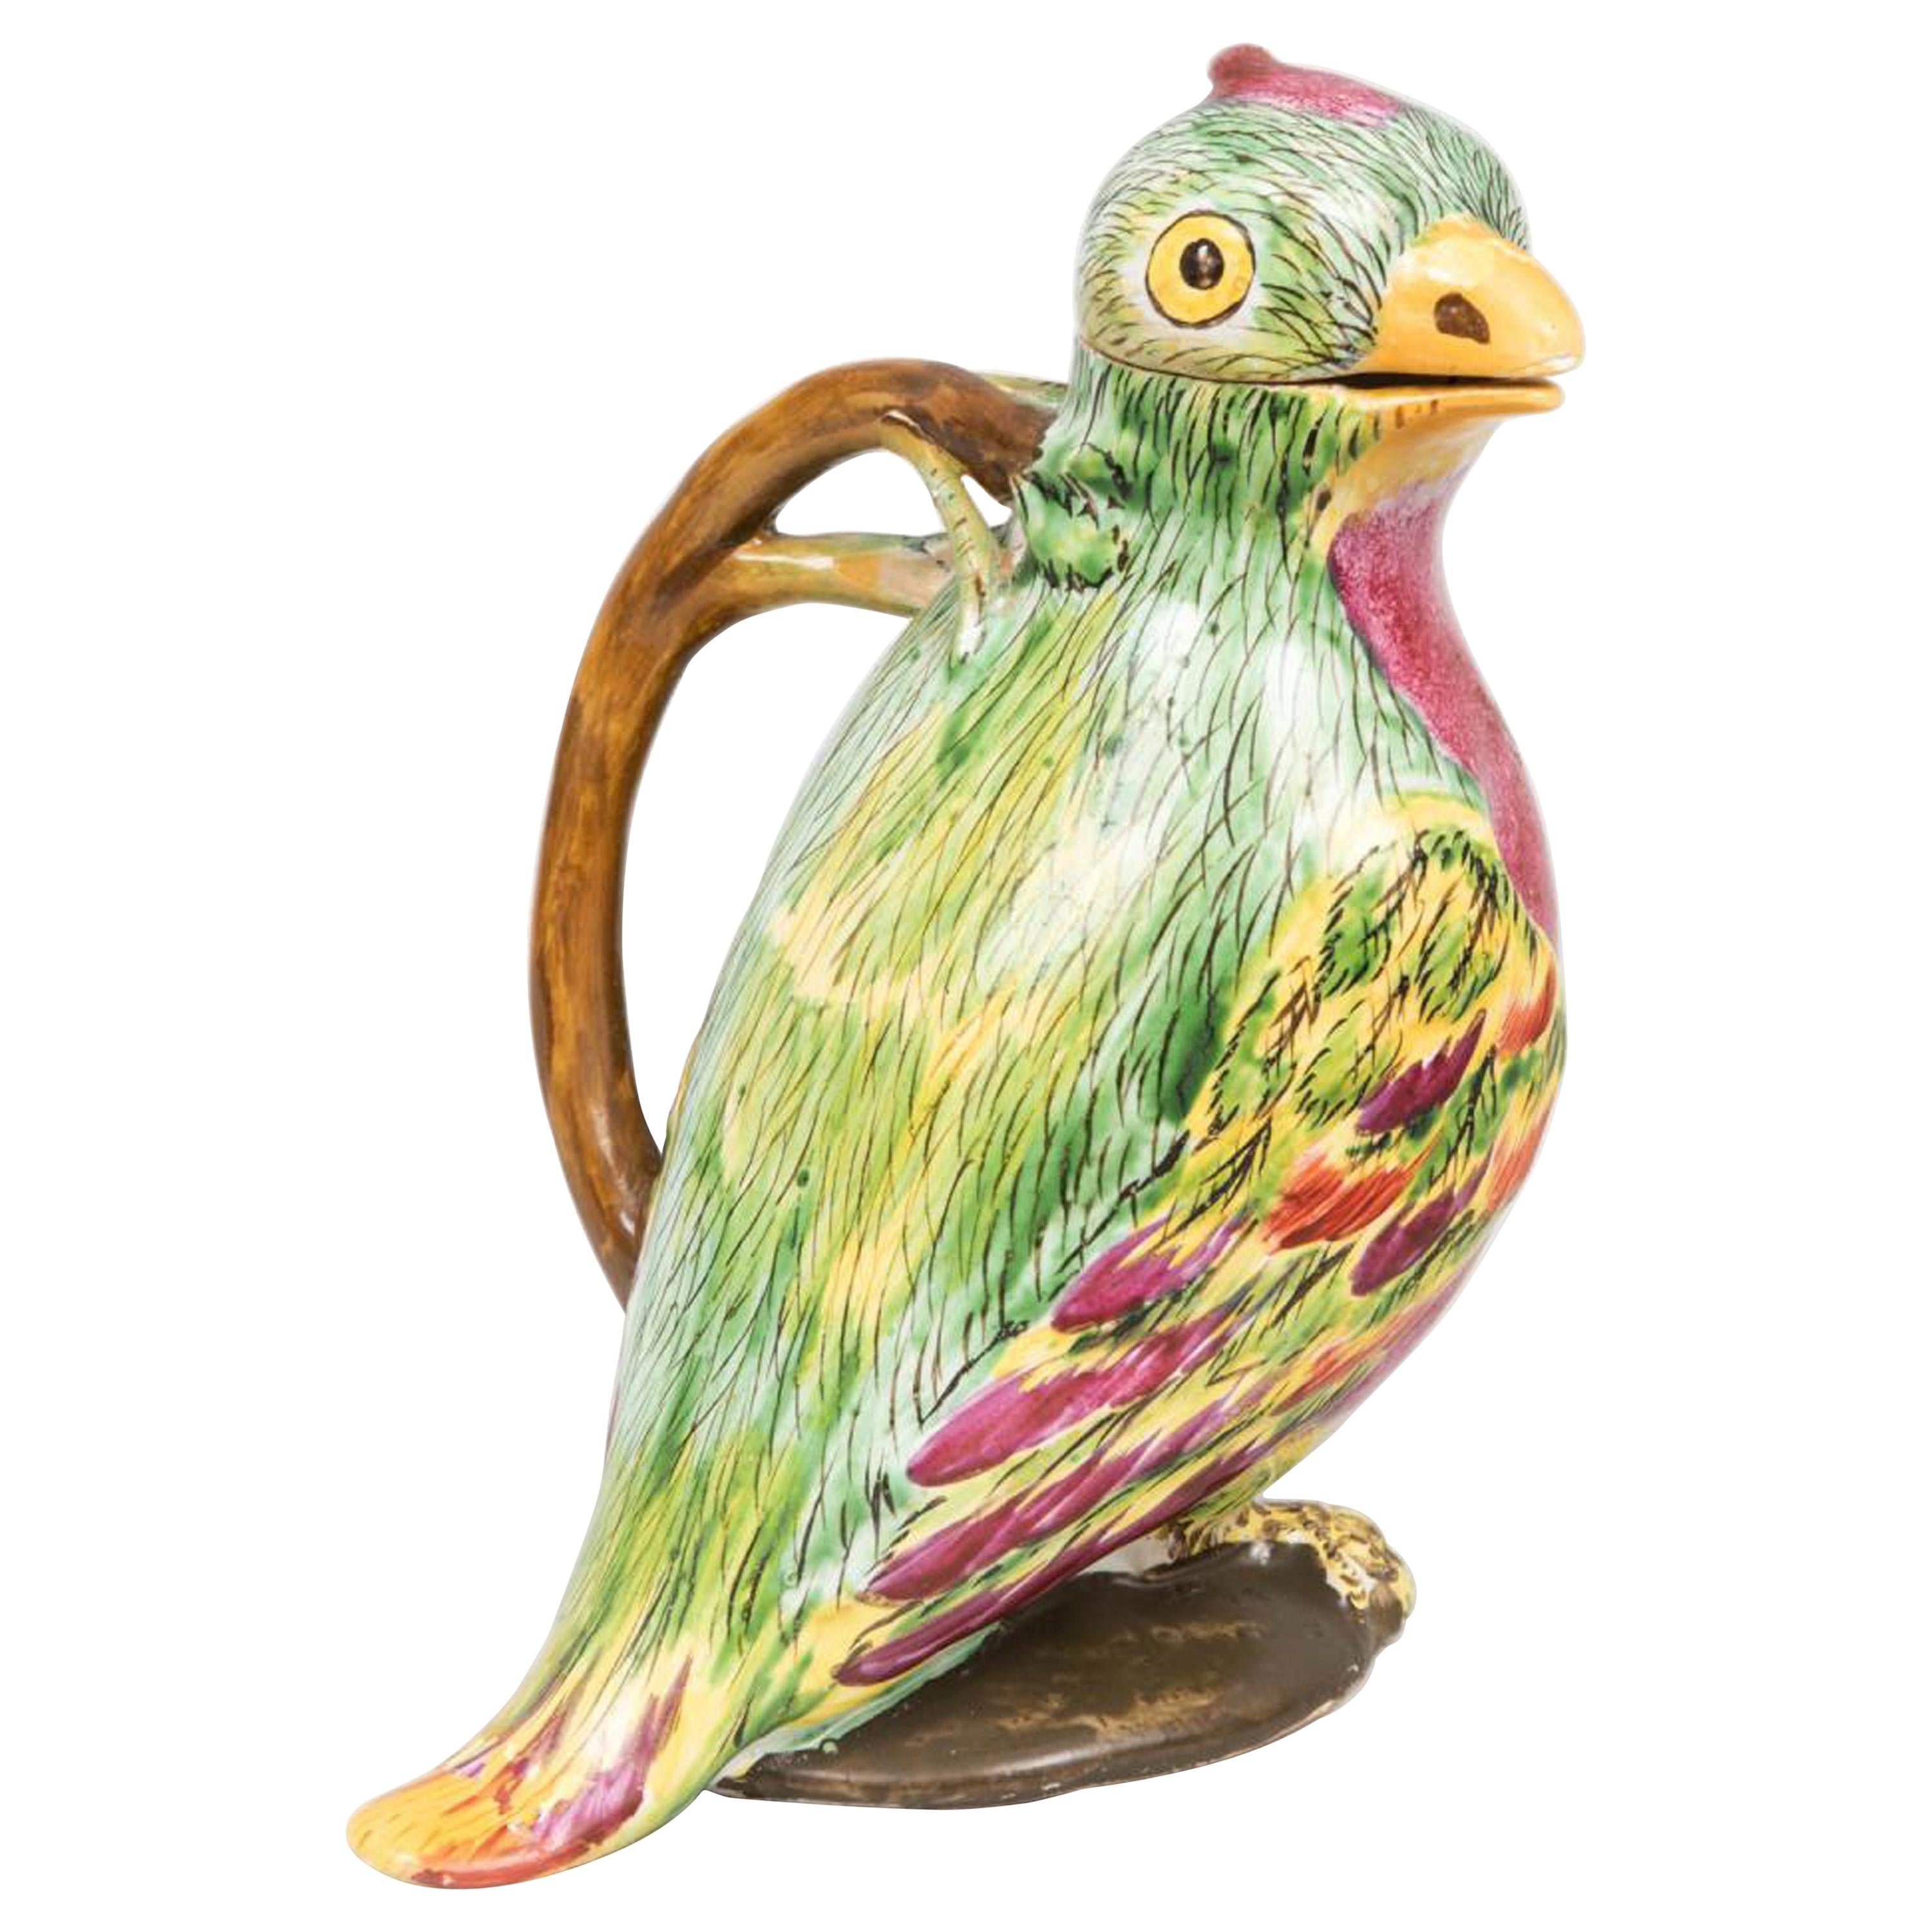 Proskau Fayence Tromp L'Oeil Krug in Form eines Papageis, um 1770